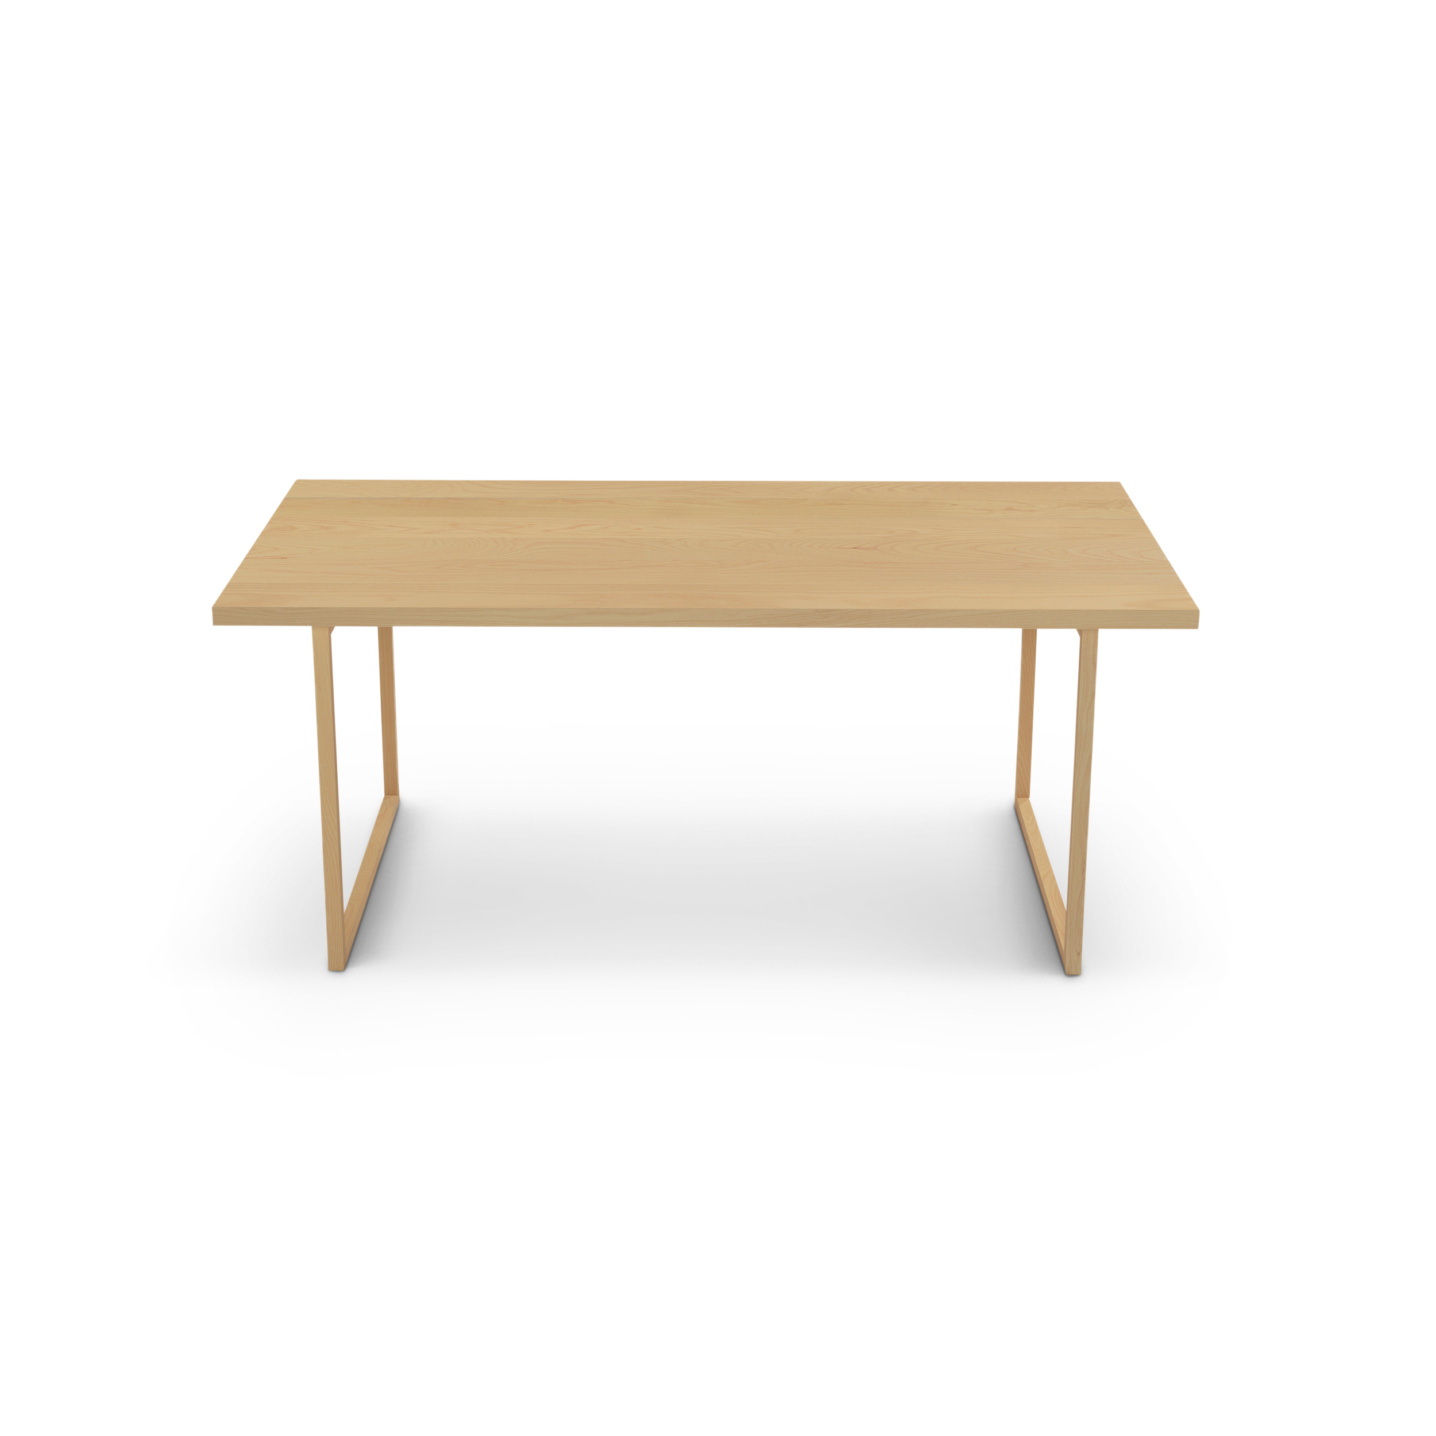 Ash Scandinavian wood planked table